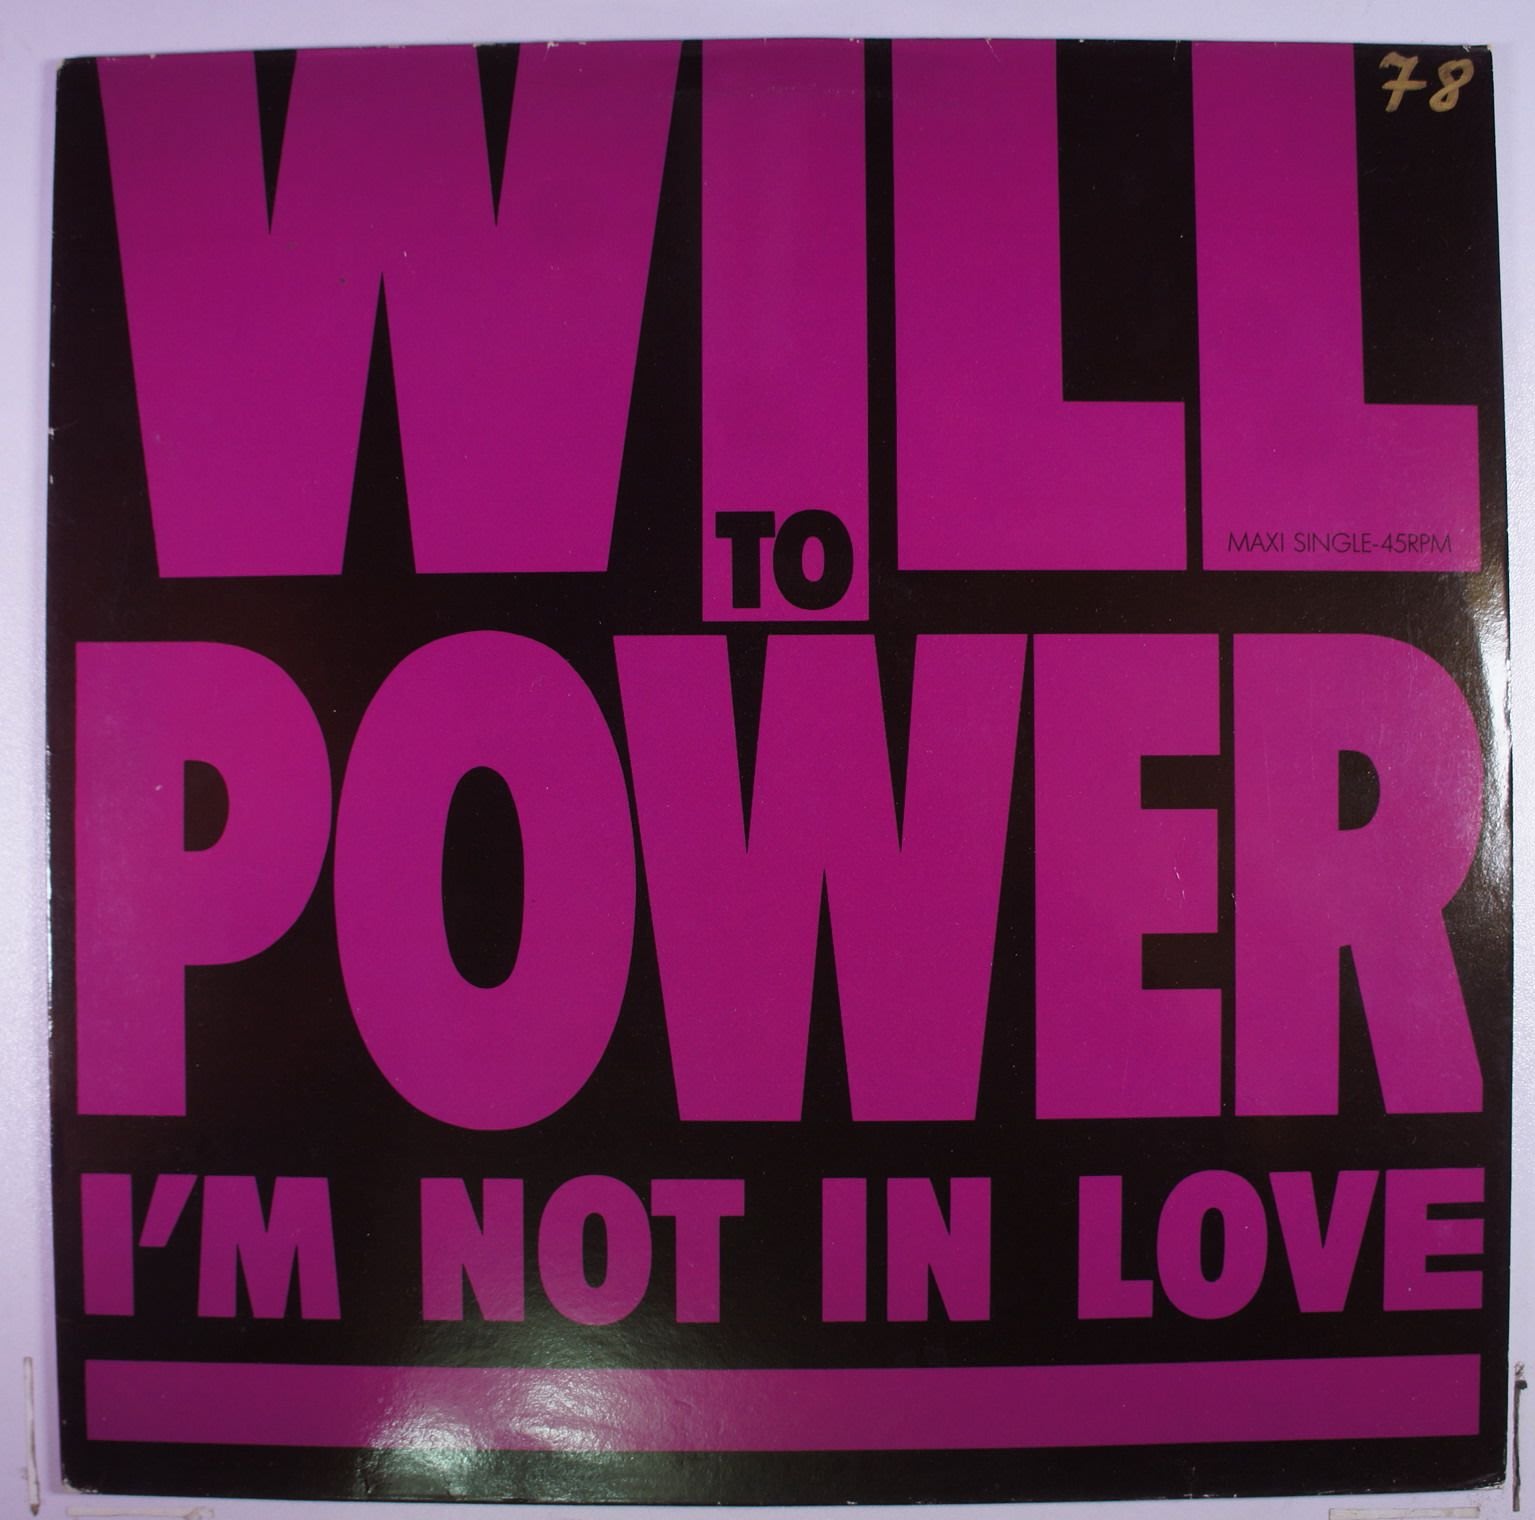 二手歐版單曲黑膠 Will To Power I M Not In Love Yahoo奇摩拍賣